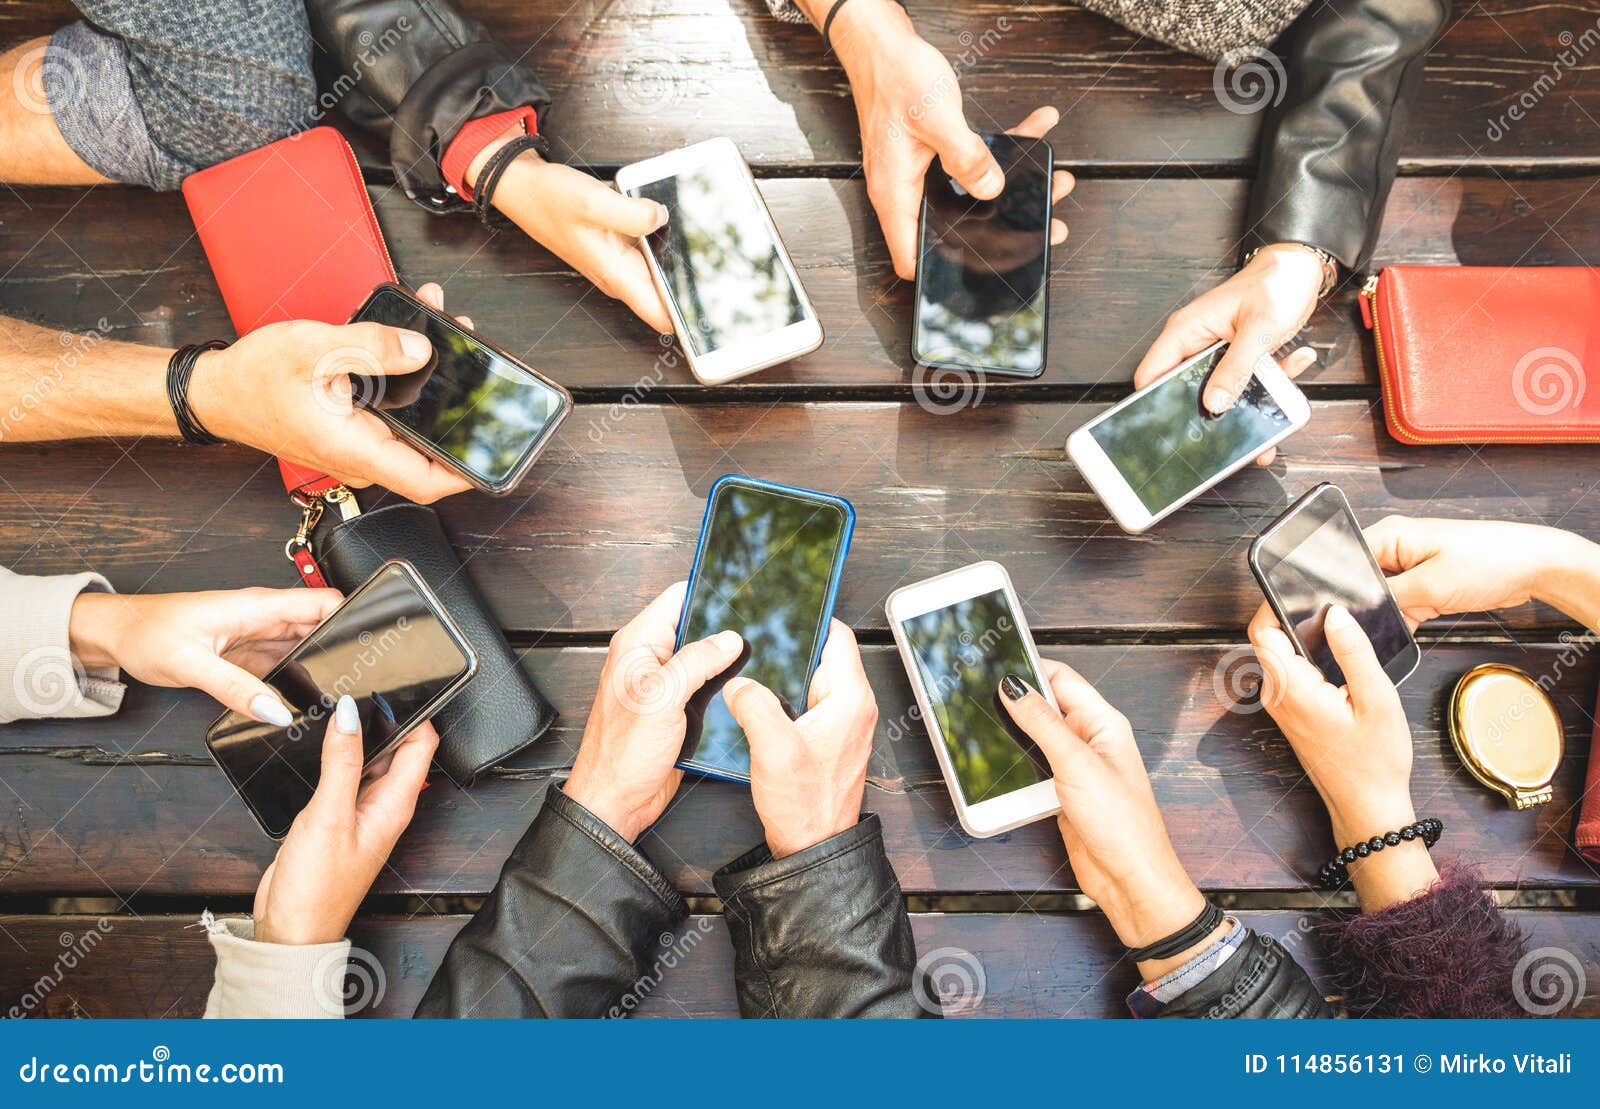 people group having addicted fun together using smartphones - de